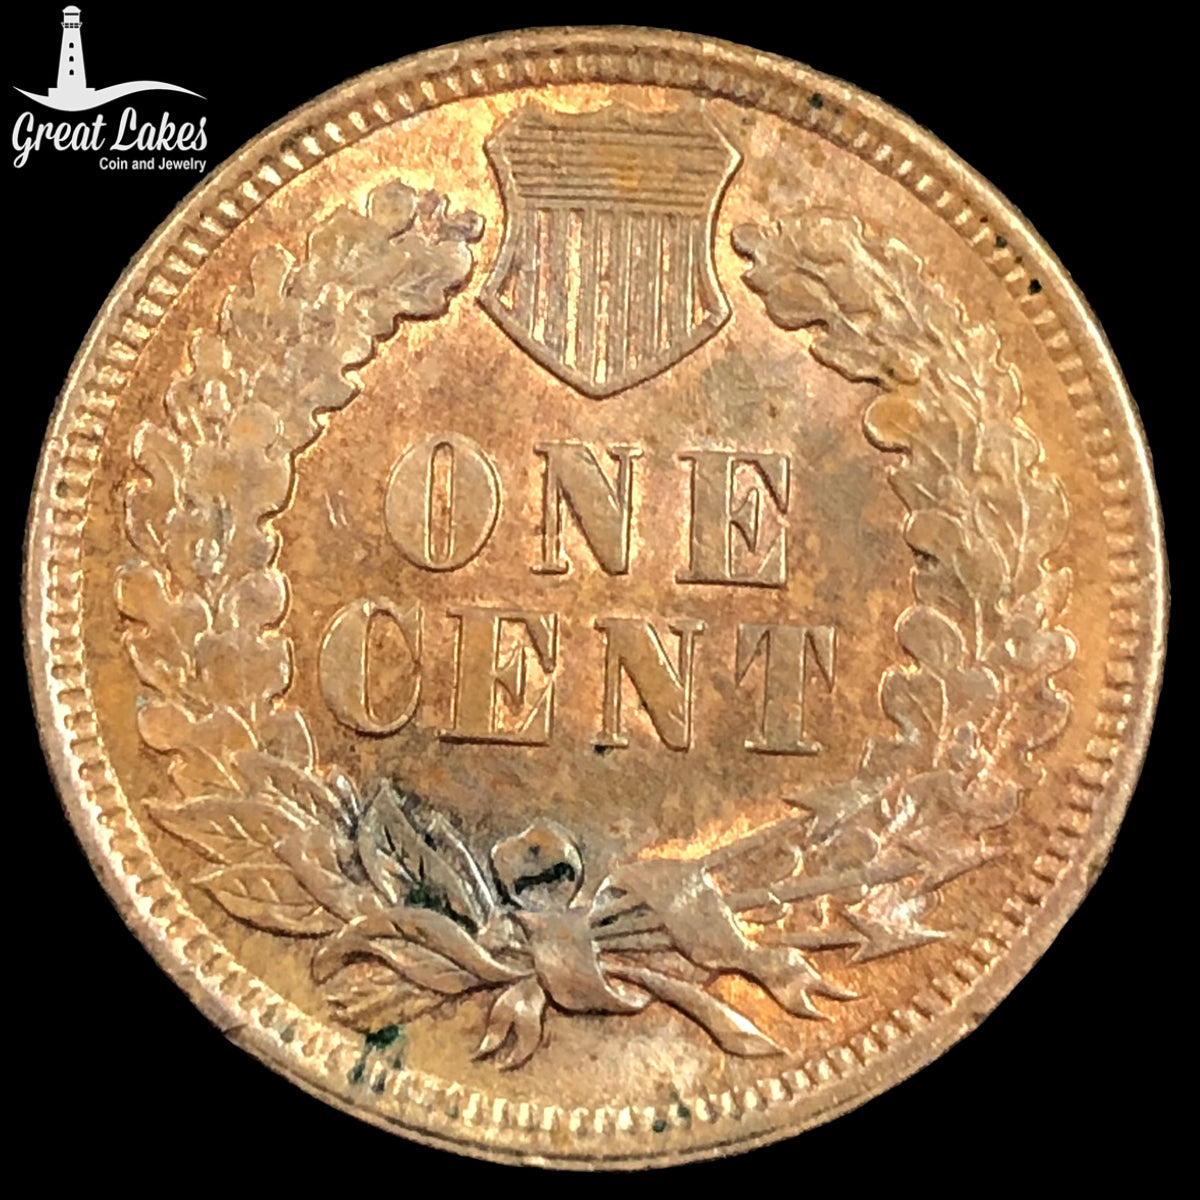 1907 Indian Cent (BU)